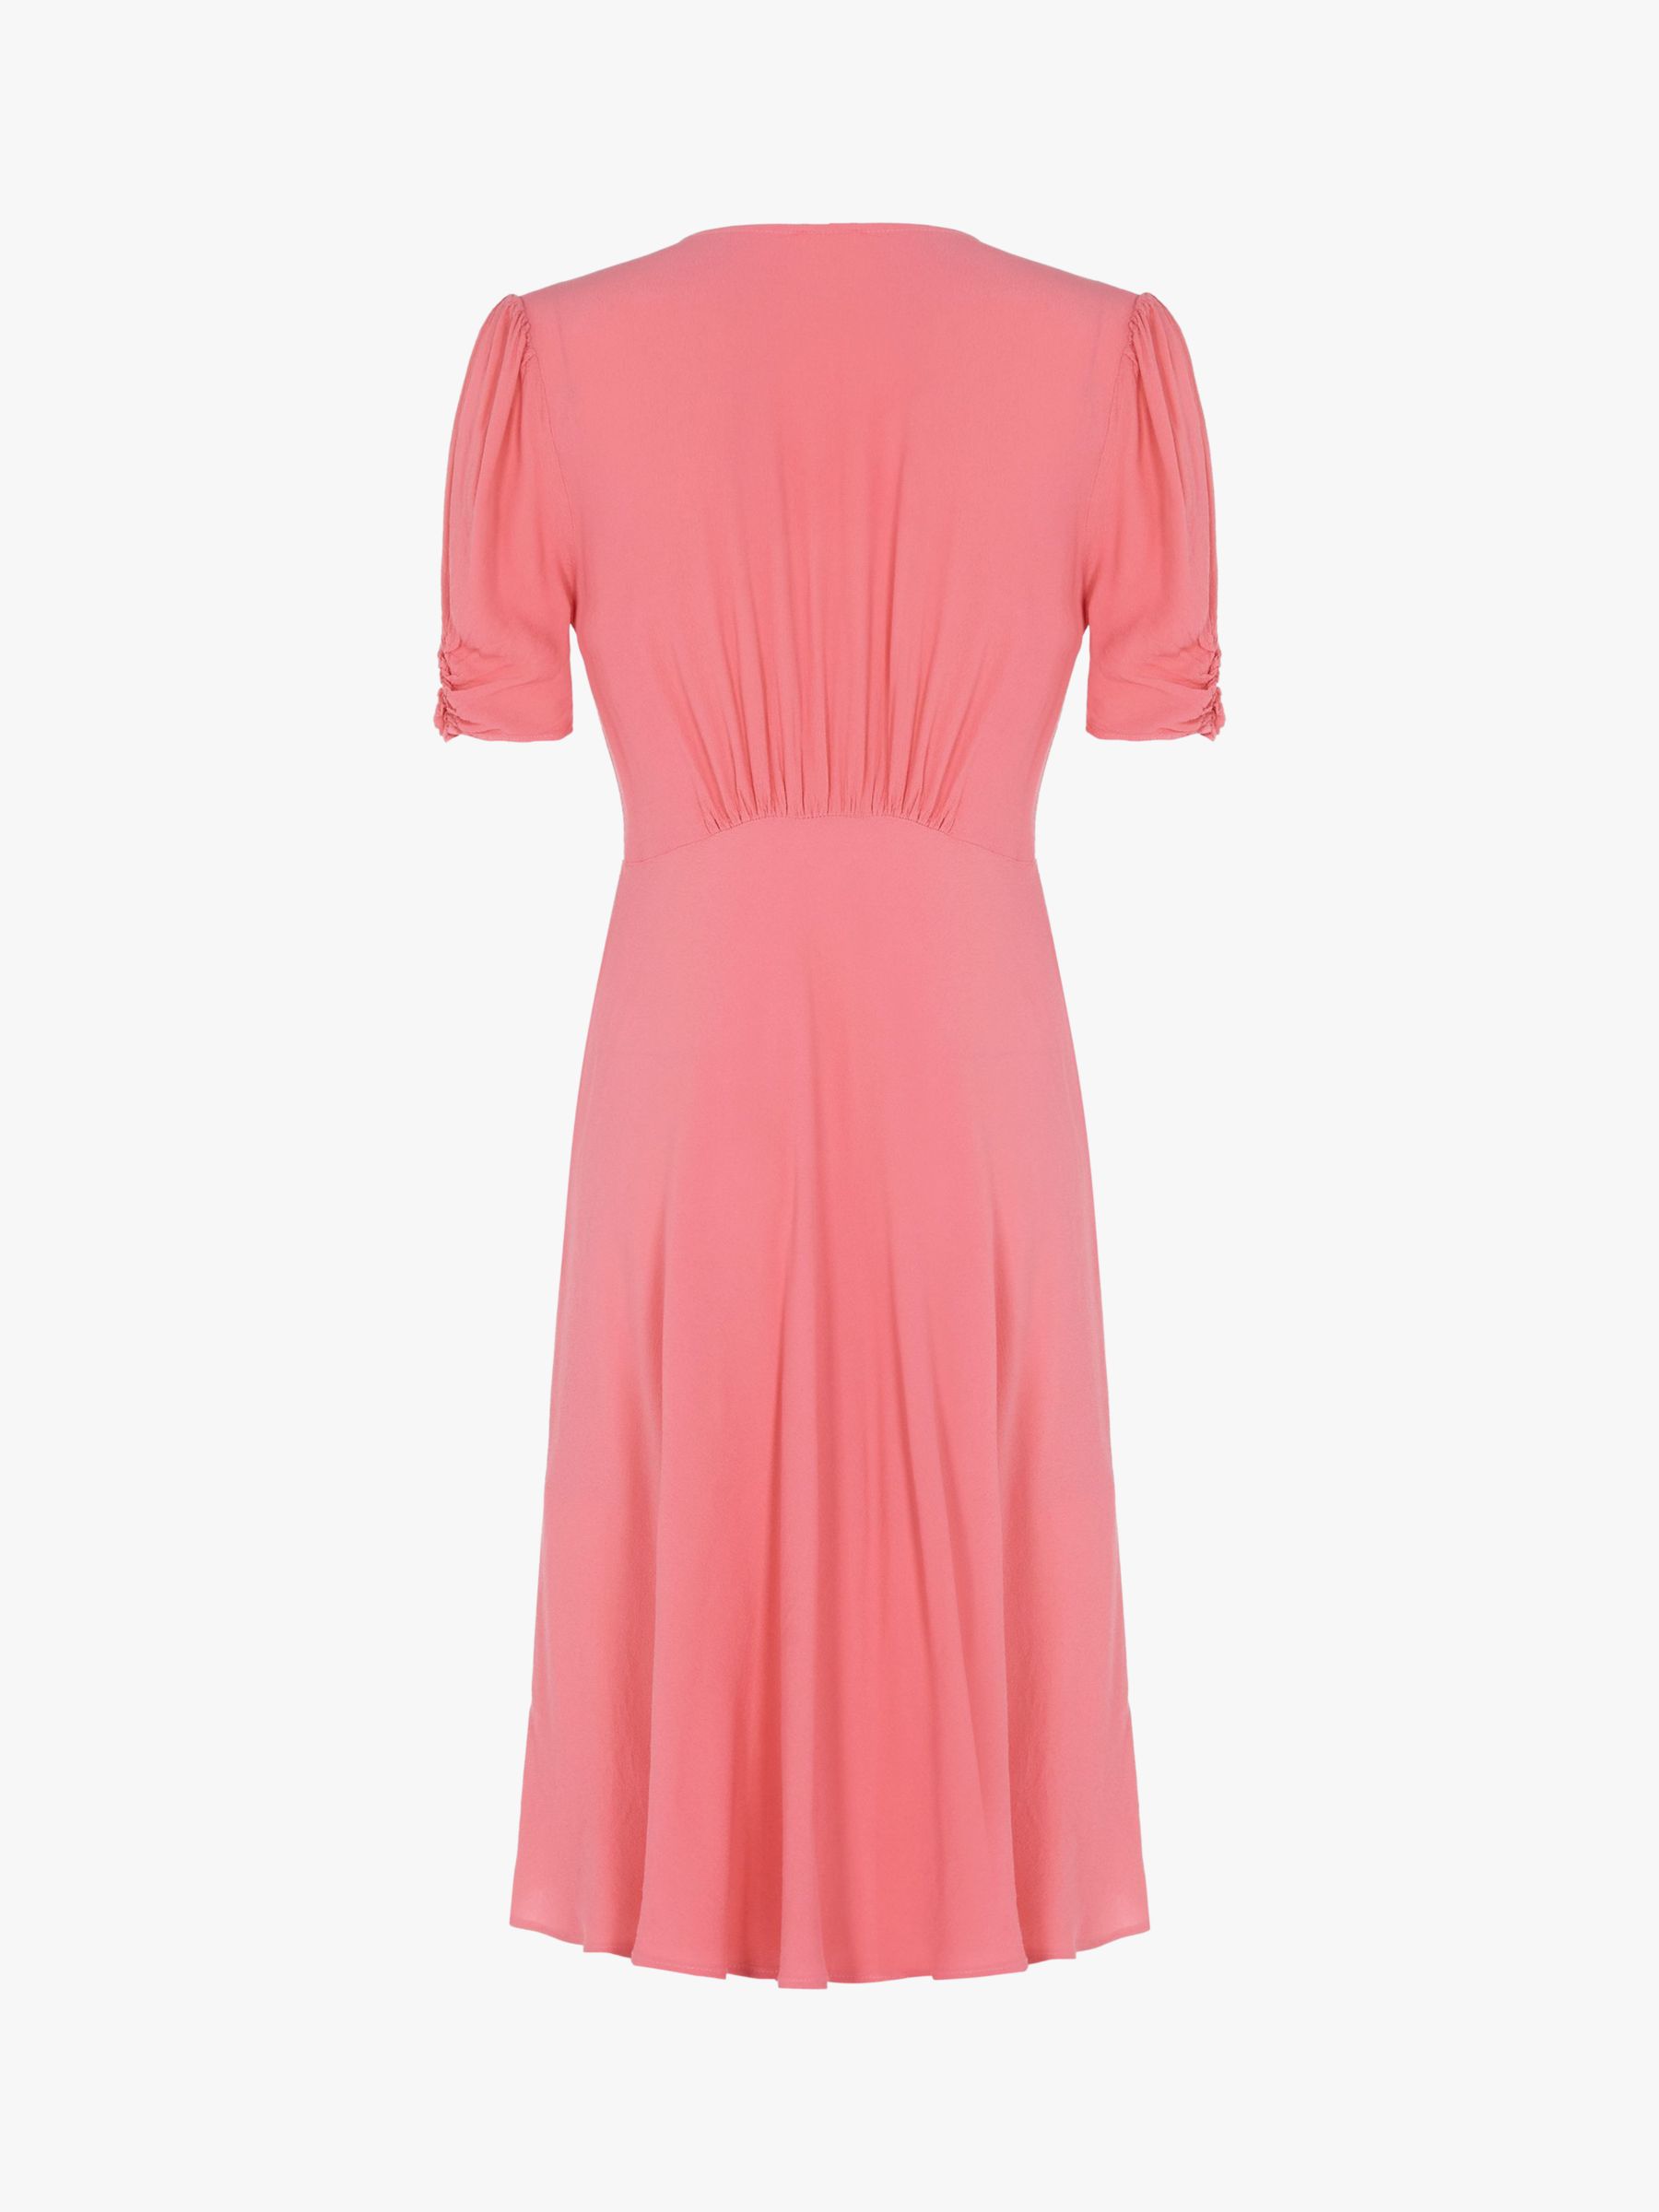 Ghost Sabrina Button Front Midi Dress, Pink at John Lewis & Partners